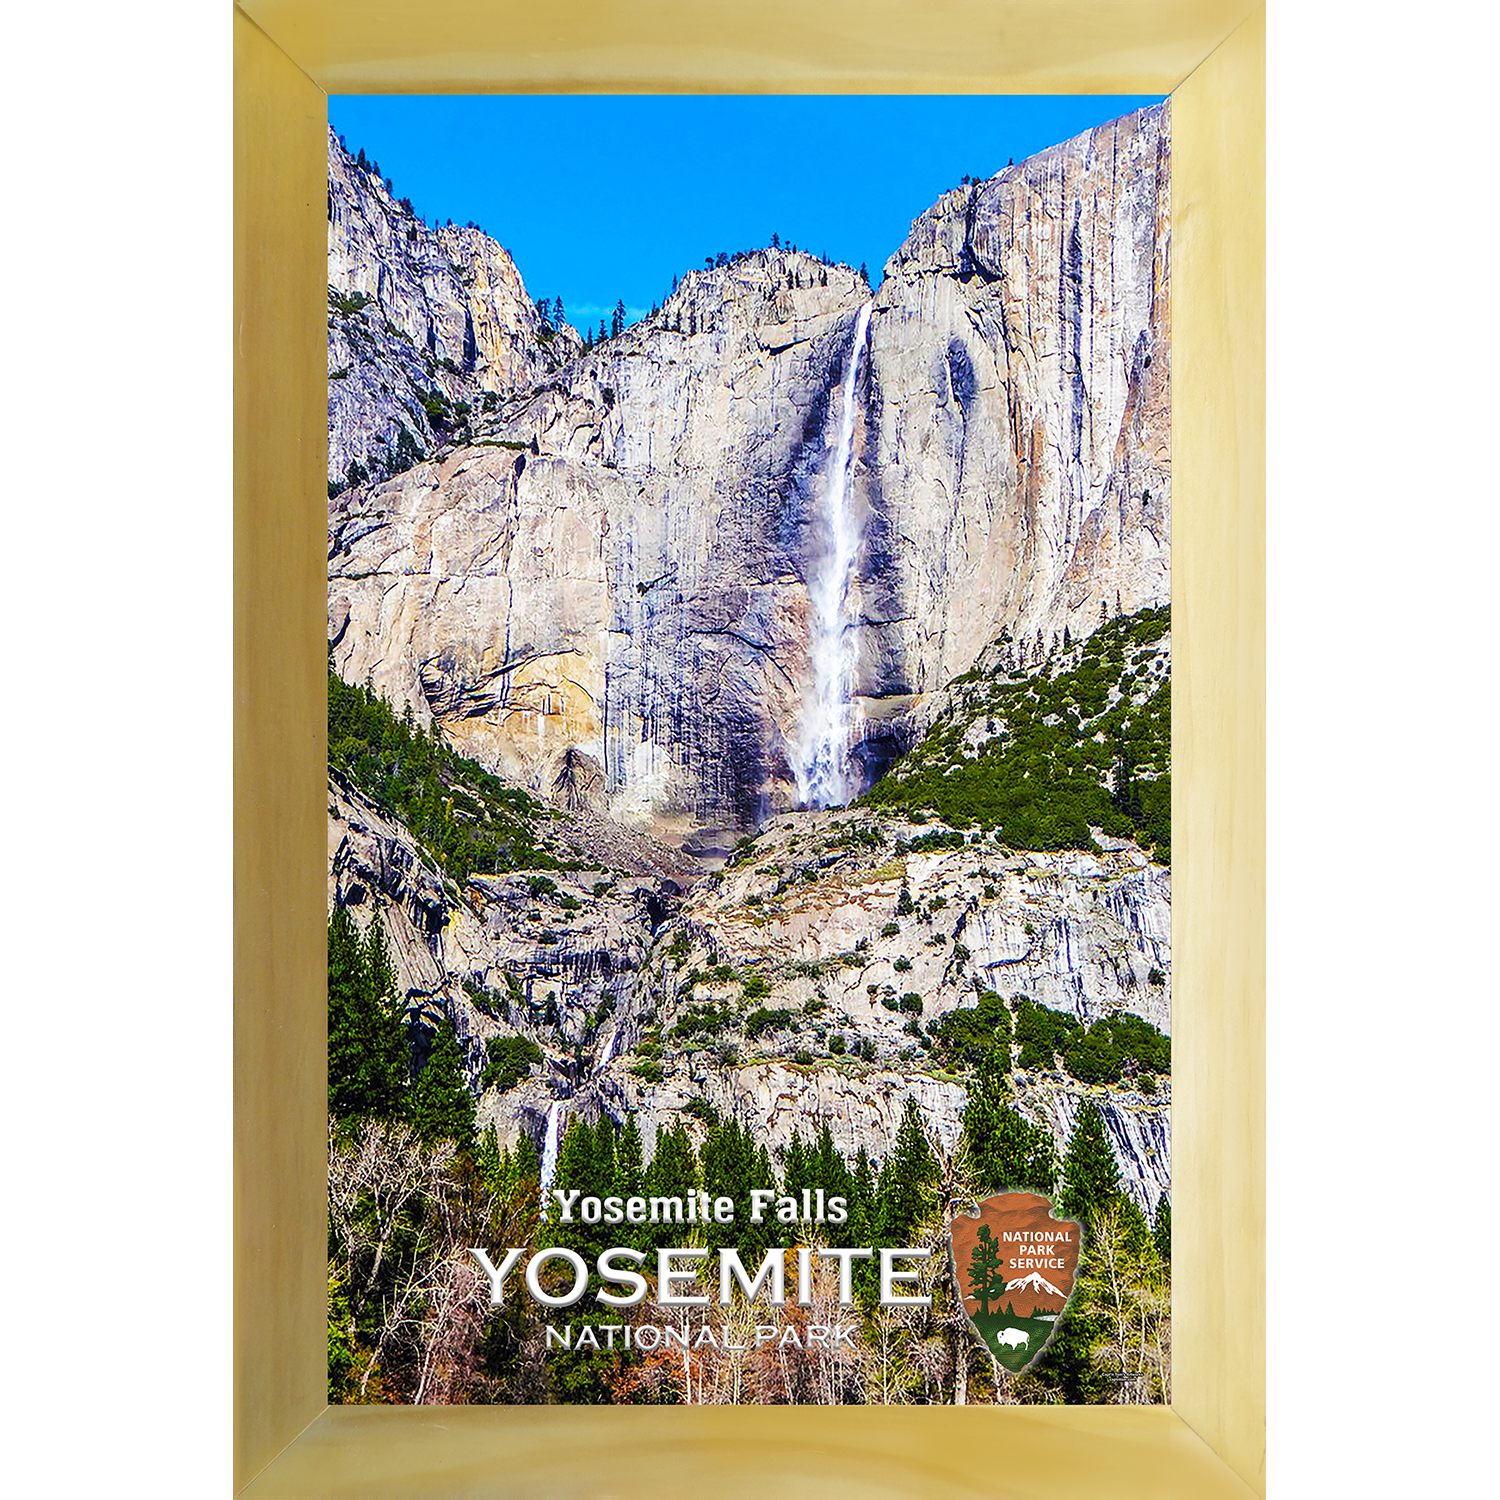 F-0028 - Yosemite Falls, Yosemite National Park - 13